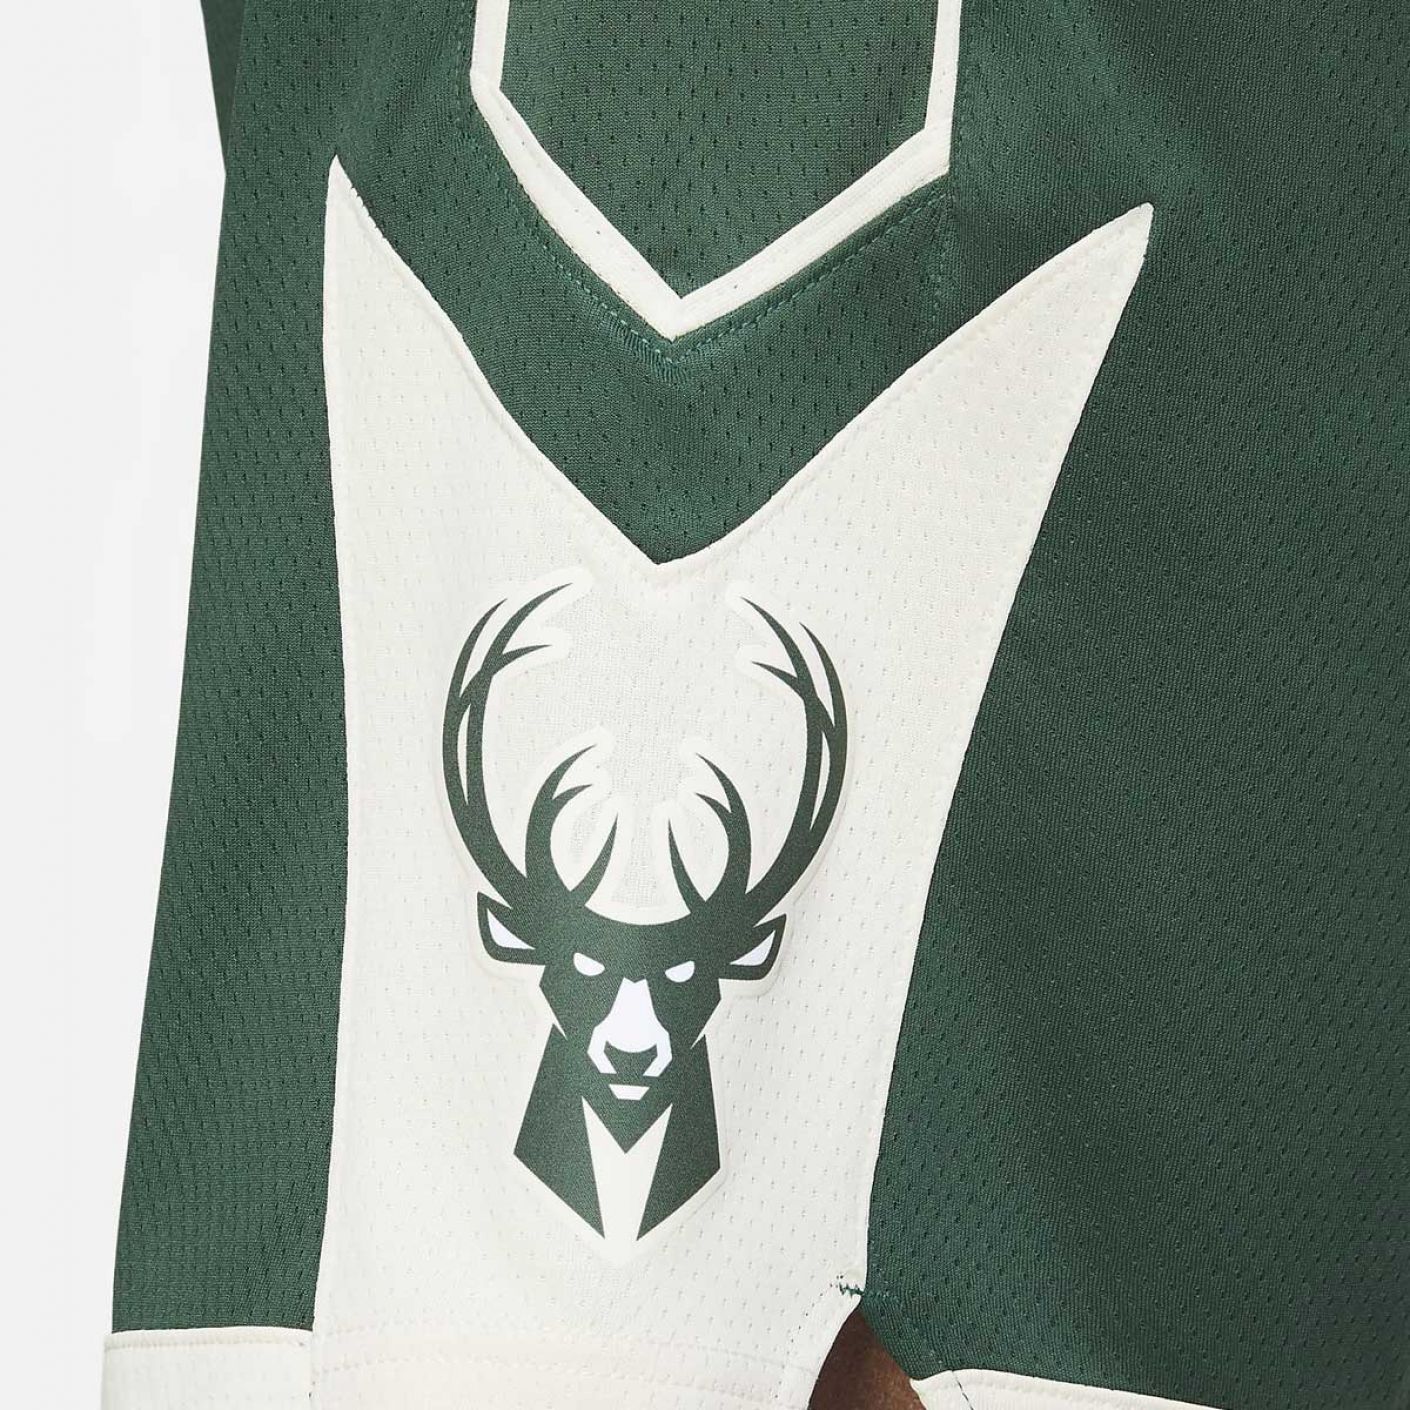 Nike Short Milwaukee Bucks Icon Edition Verde